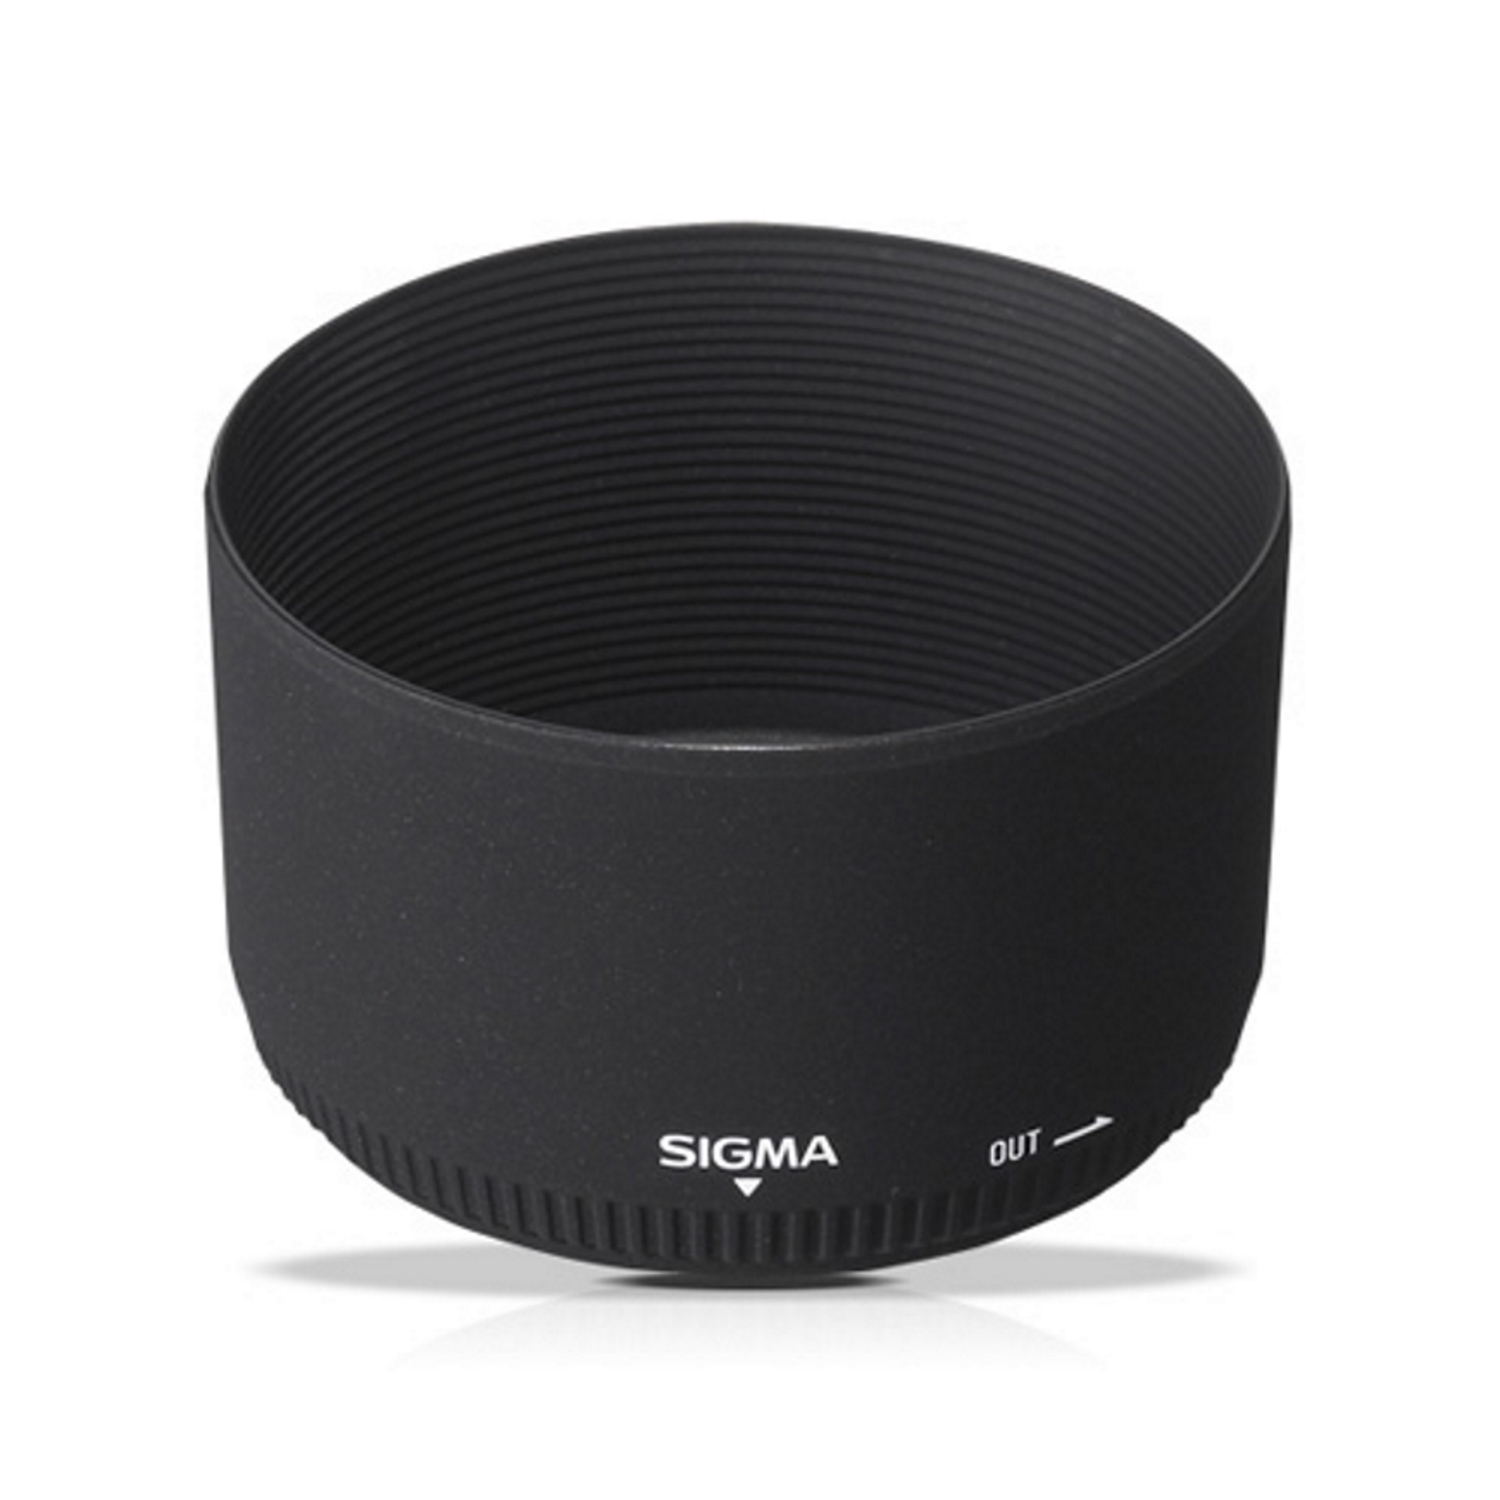 Sigma LH680-02 Lens Hood for 70-300mm f/4-5.6 DG OS